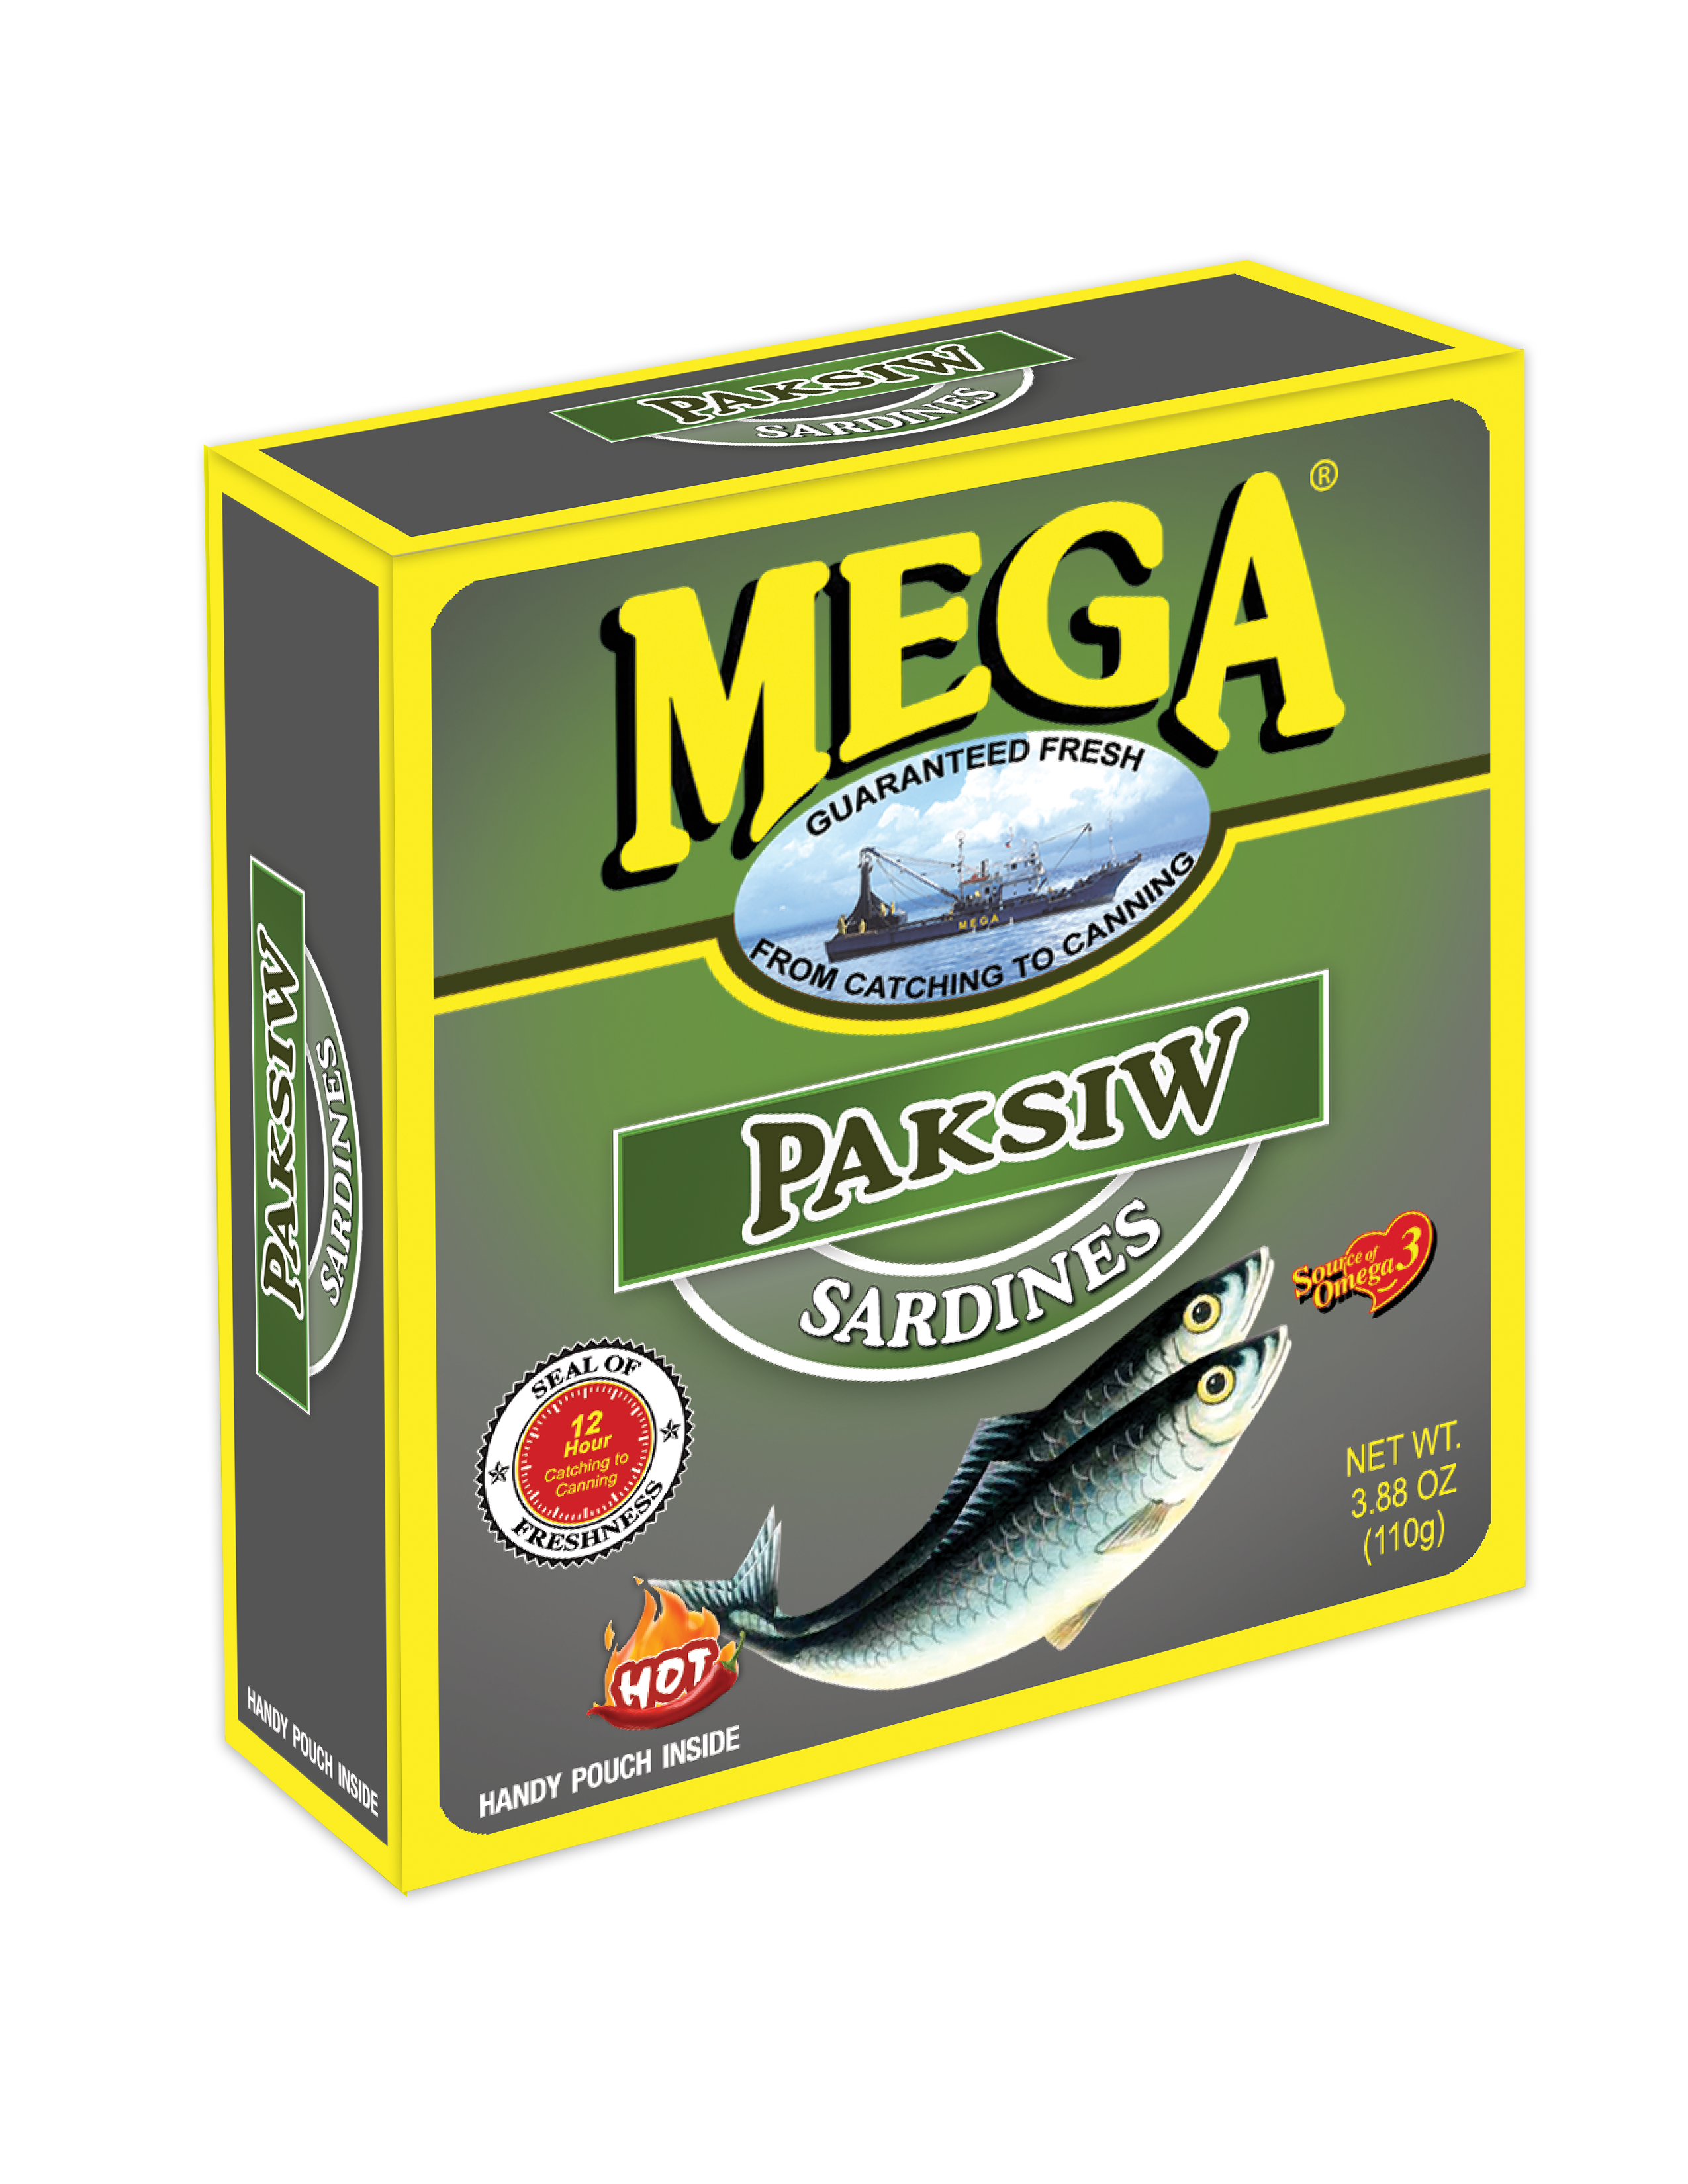 Mega sardines in paksiw. Tuna clipart sardine fish